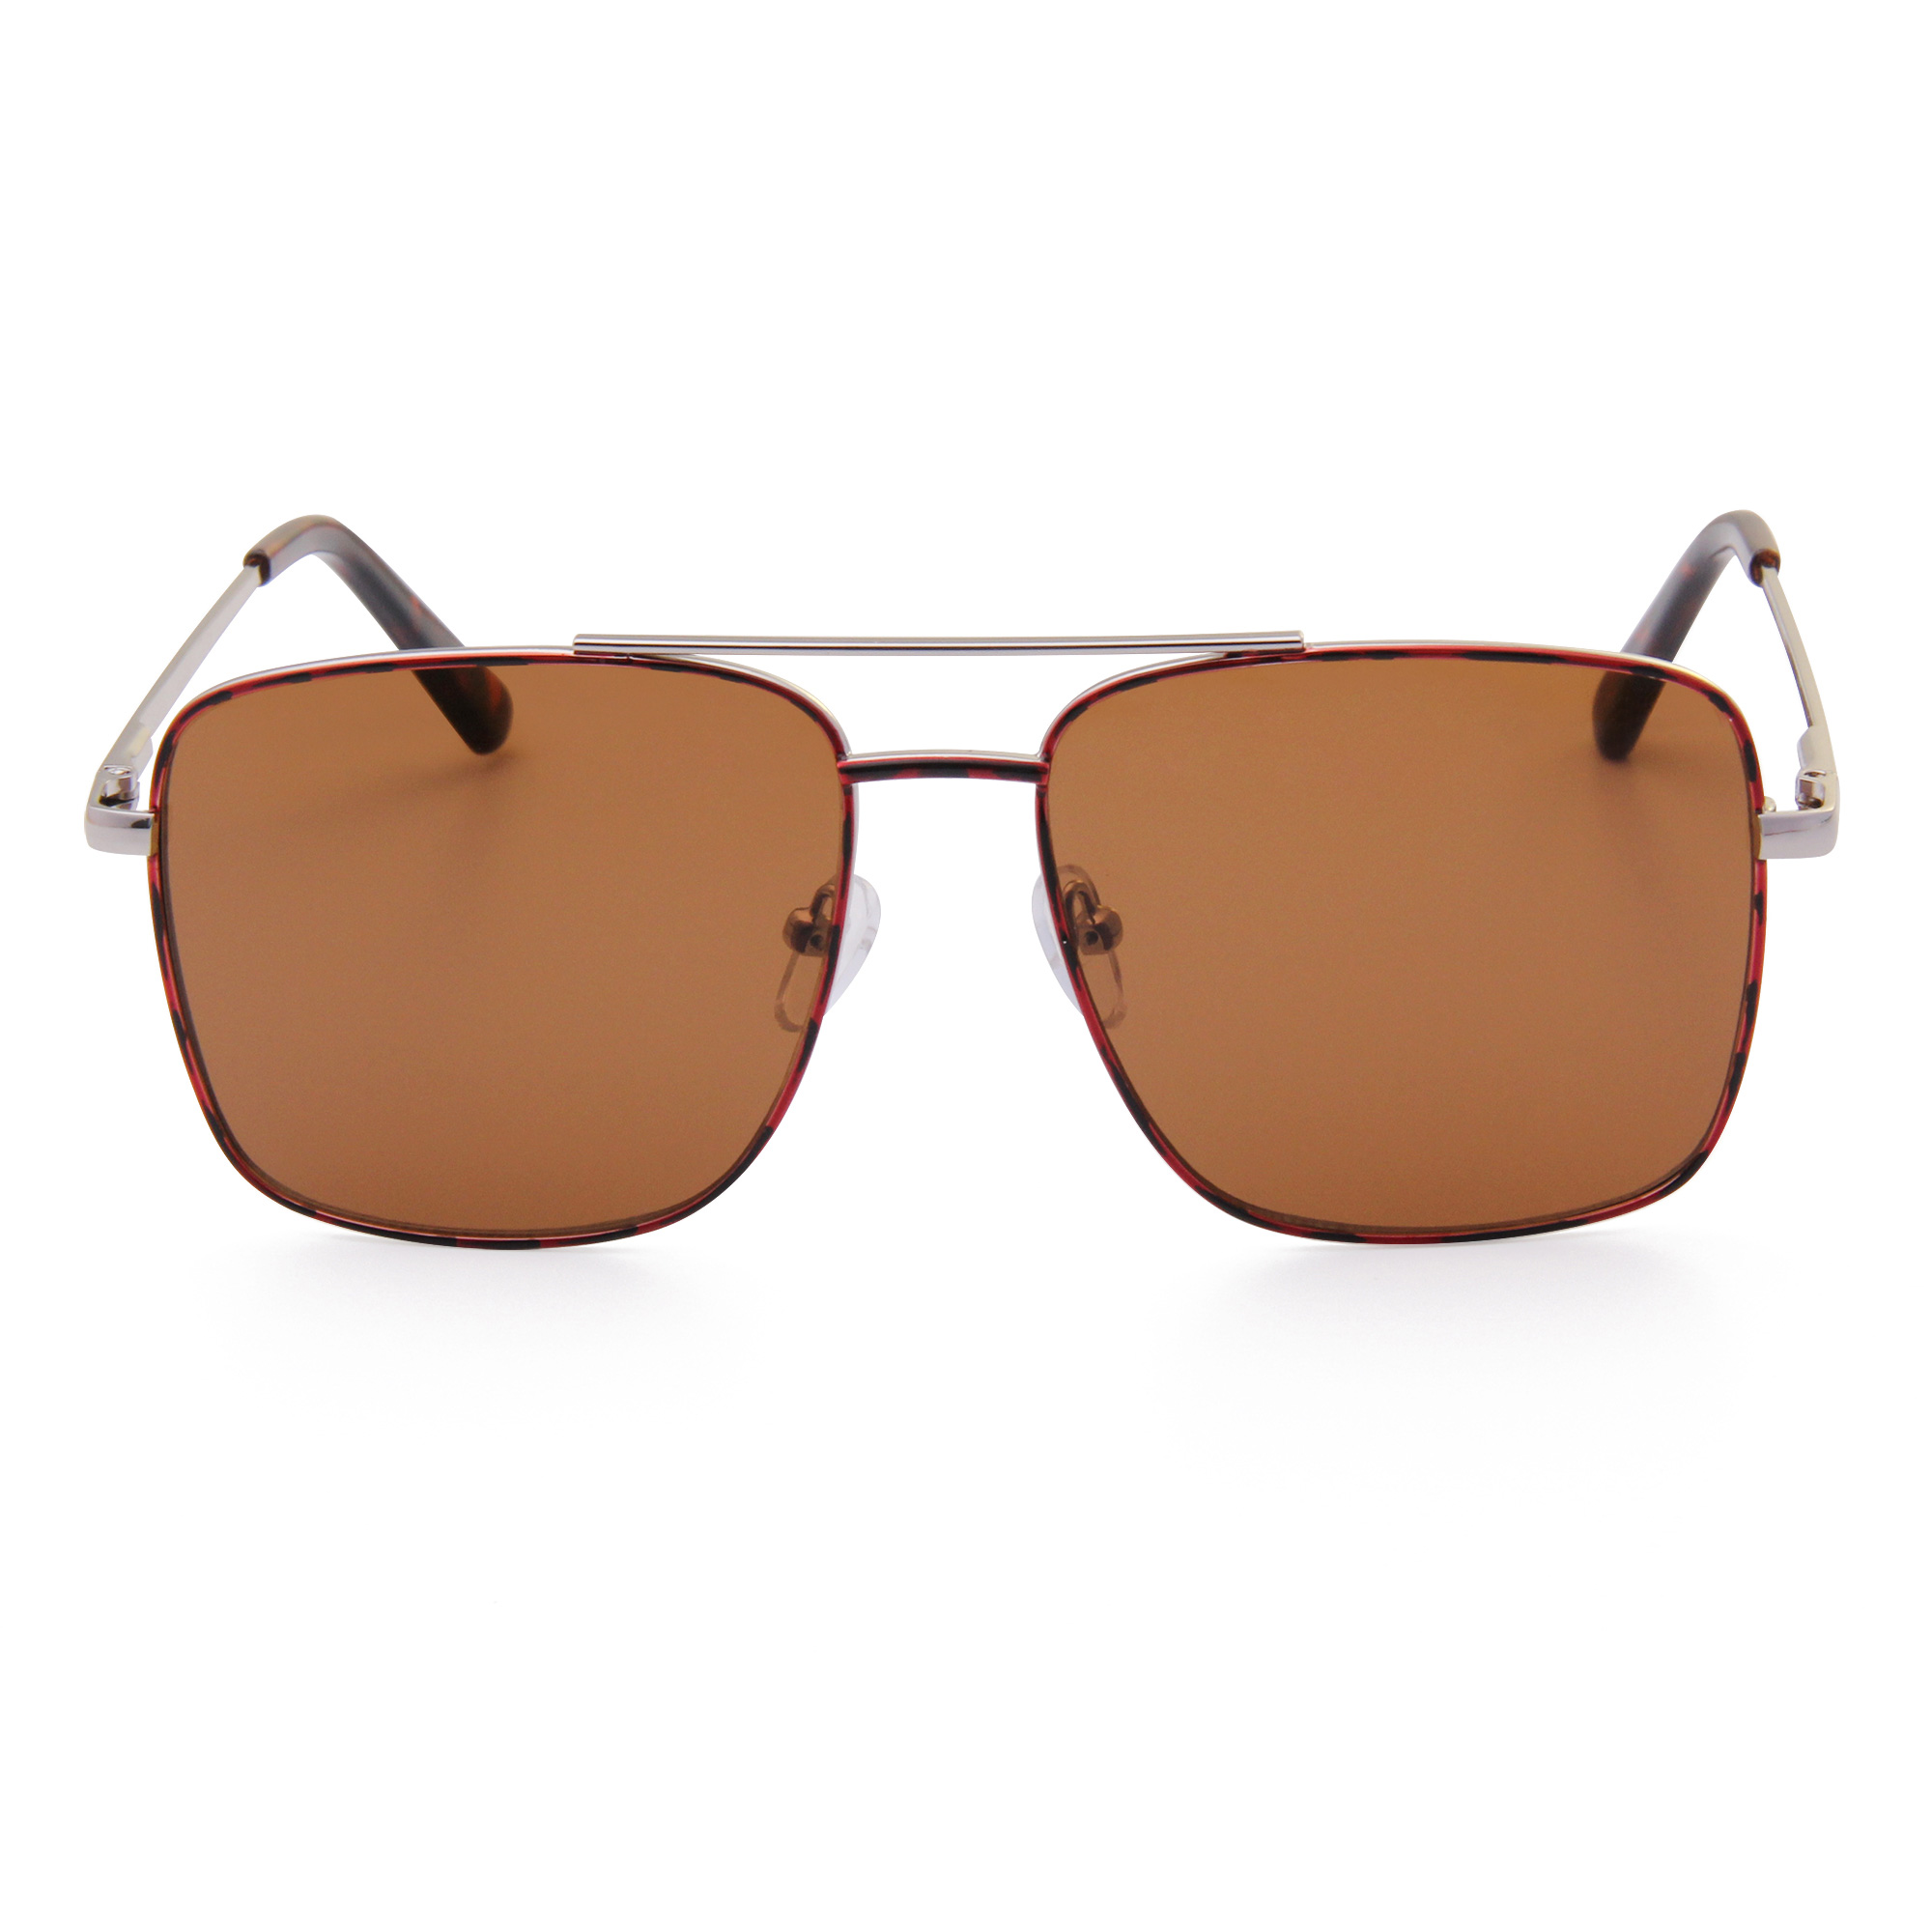 Eugenia classic mens sunglasses top brand for outdoor-1